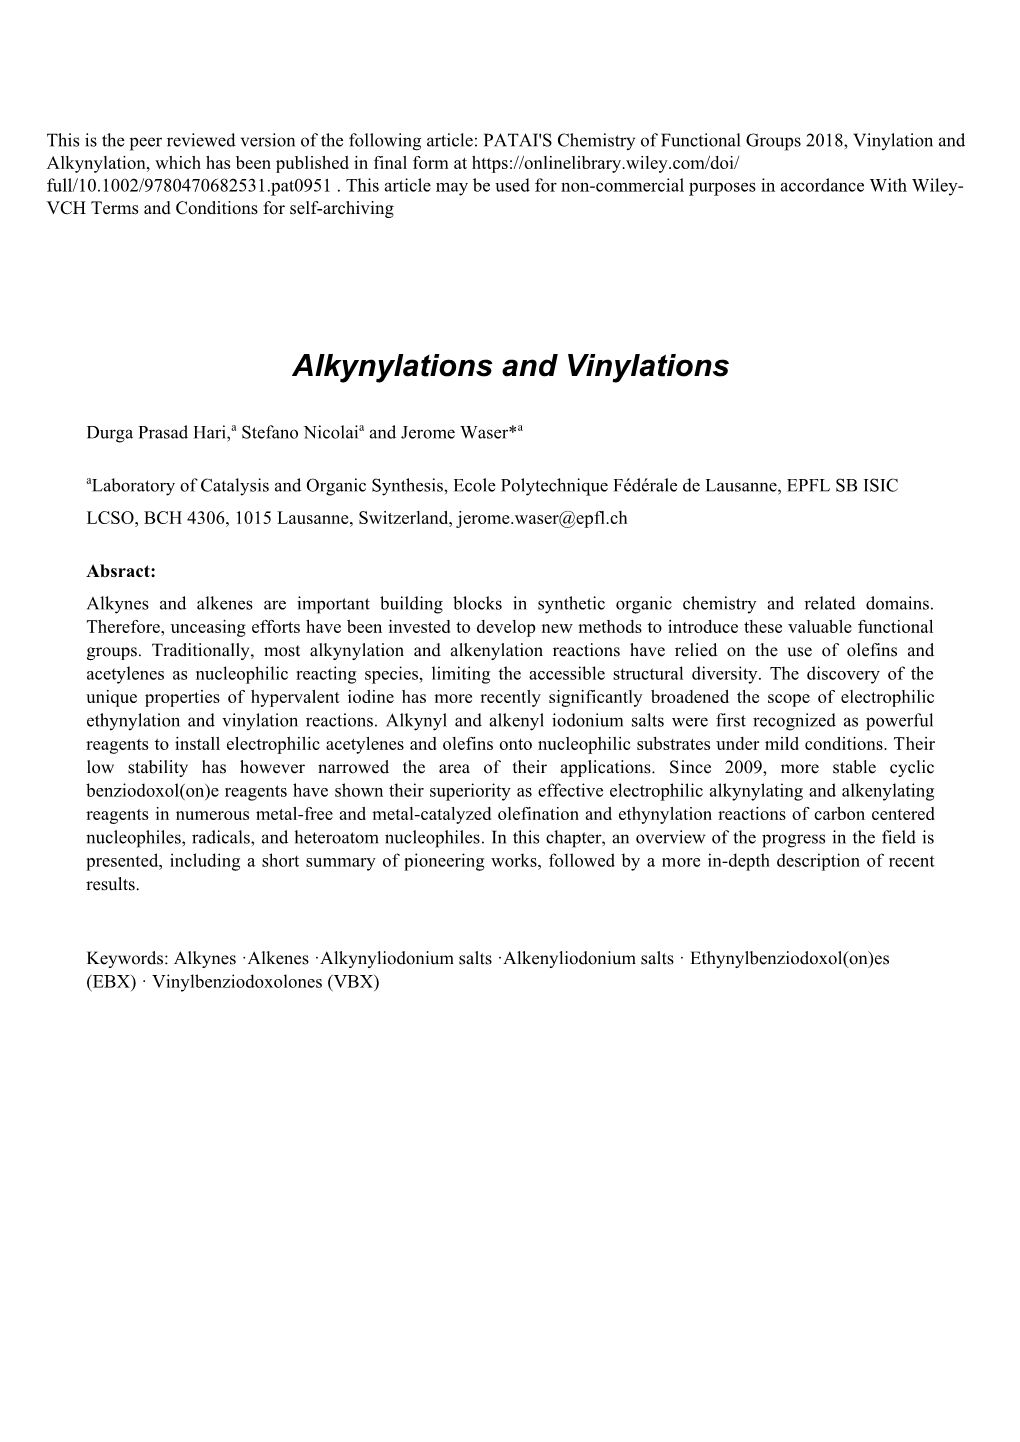 Alkynylations and Vinylations